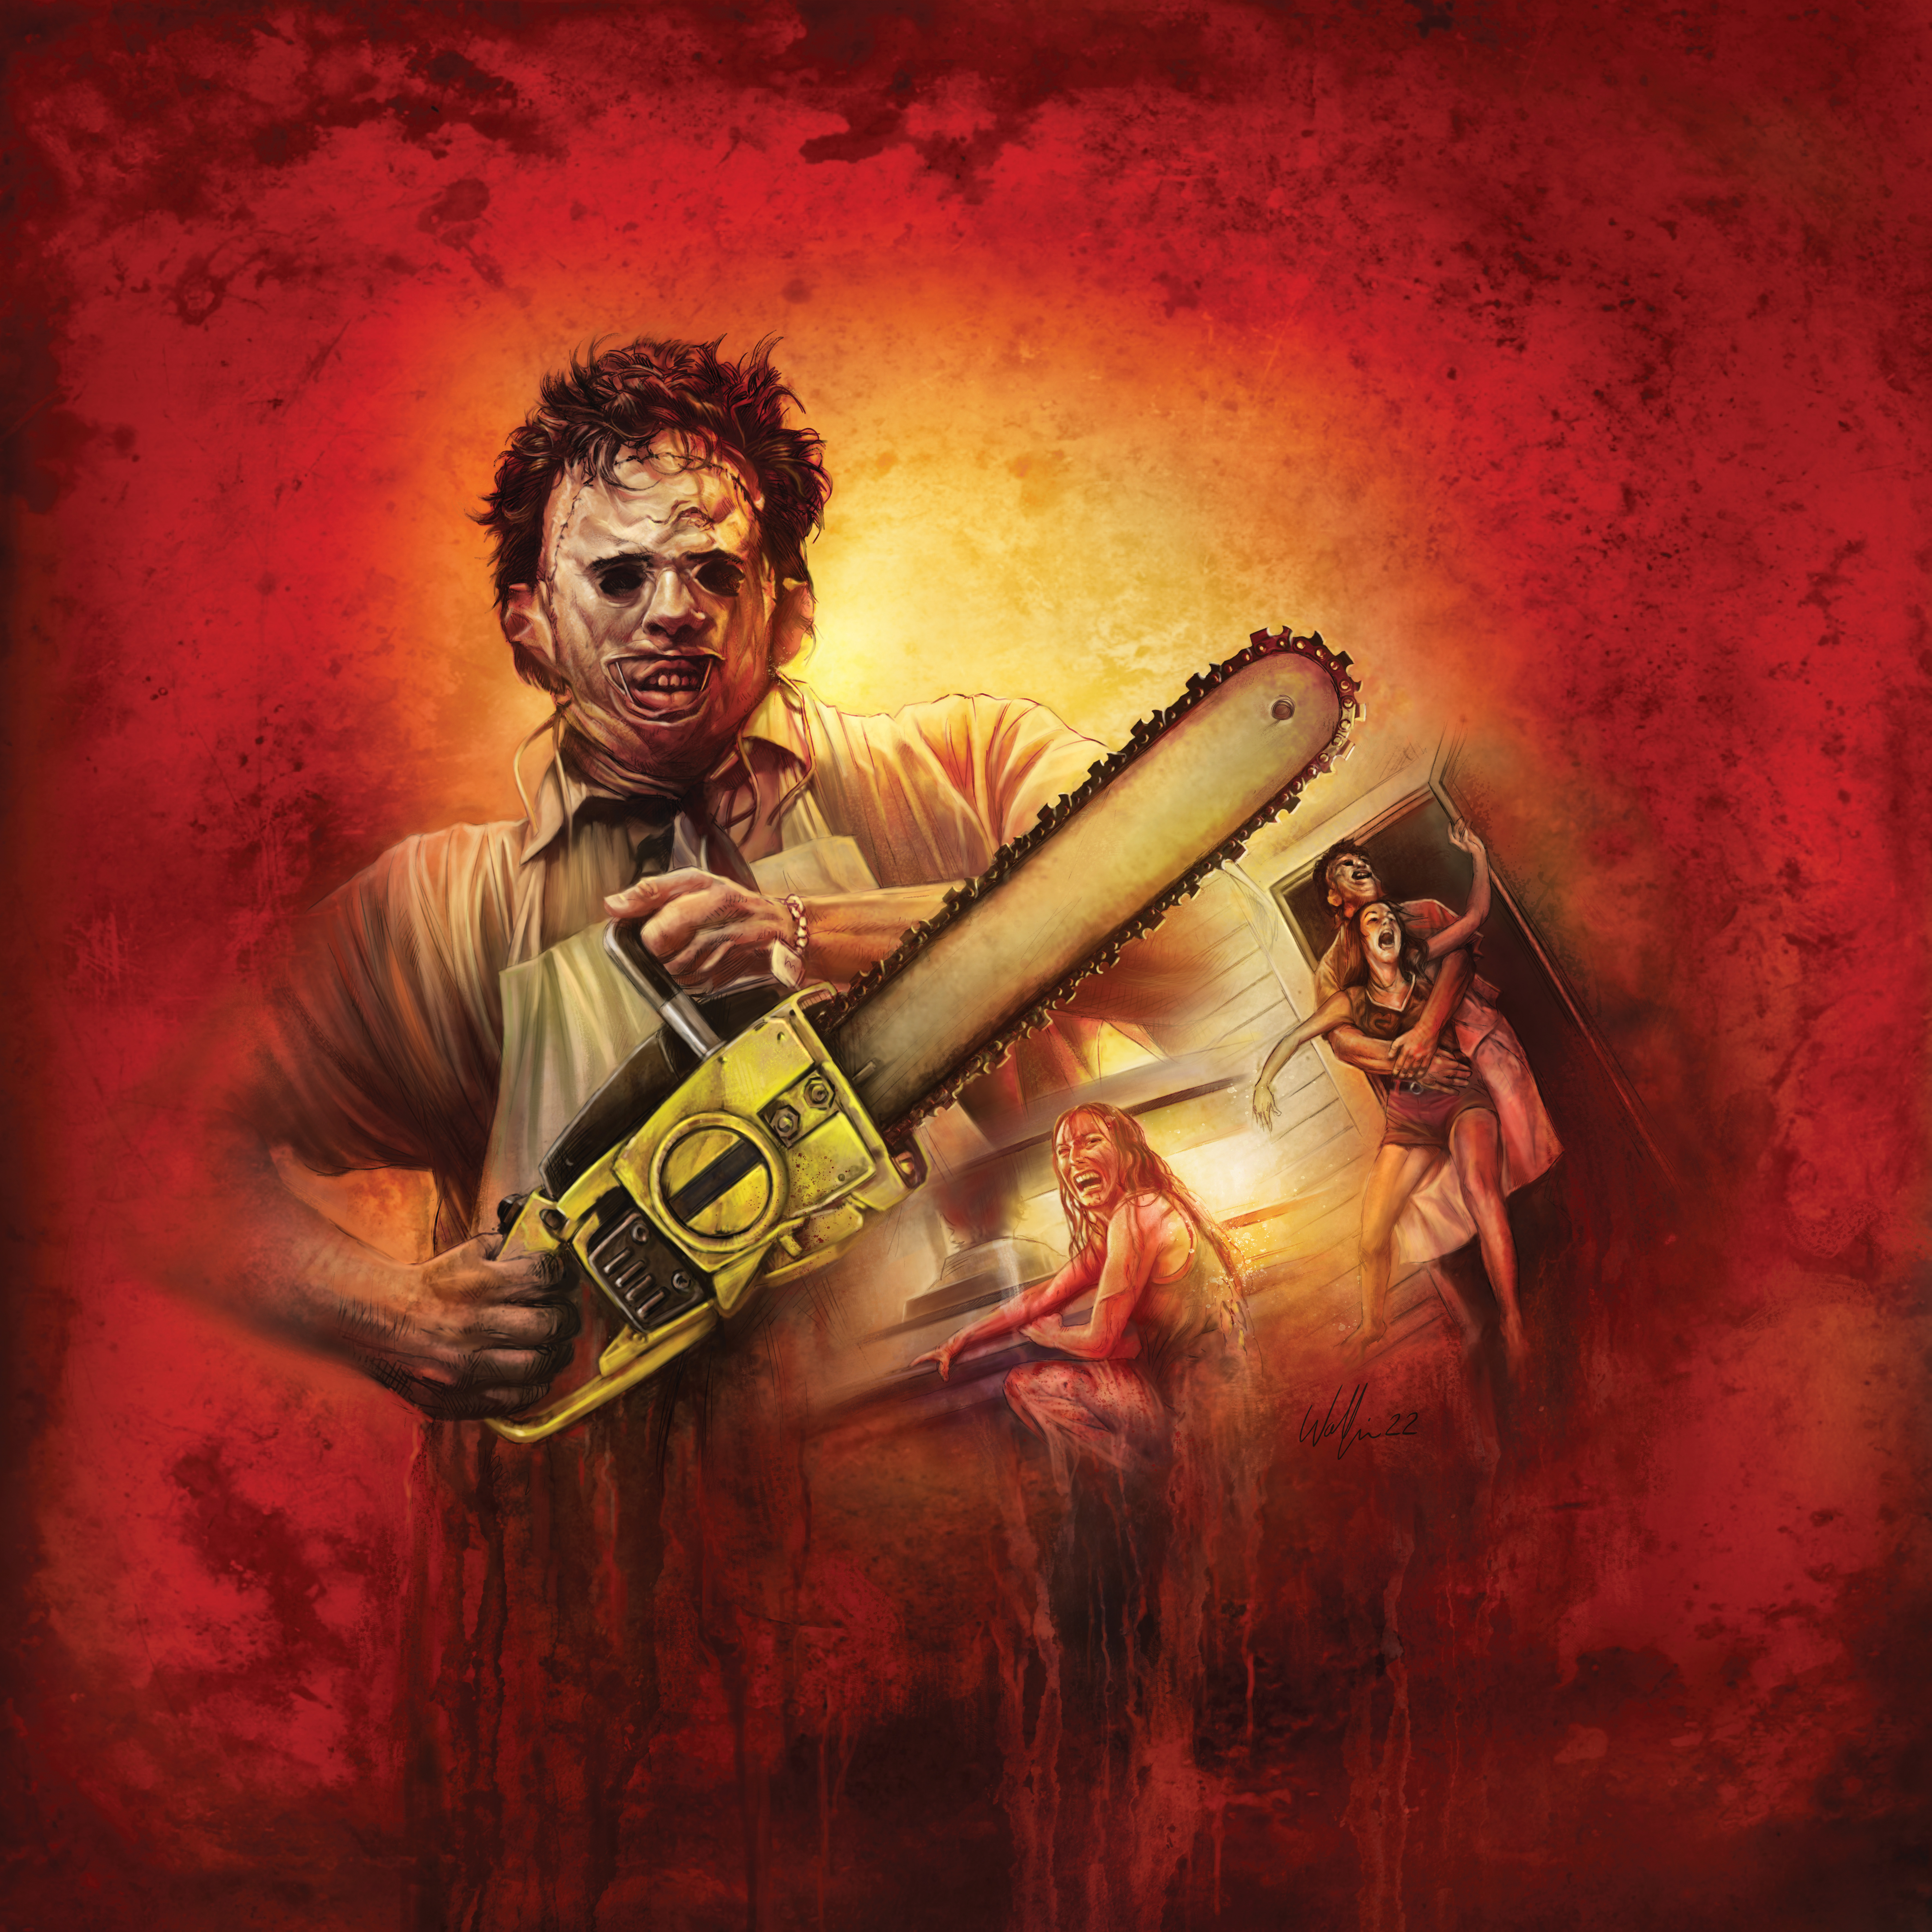 GTM #280 - The Texas Chainsaw Massacre